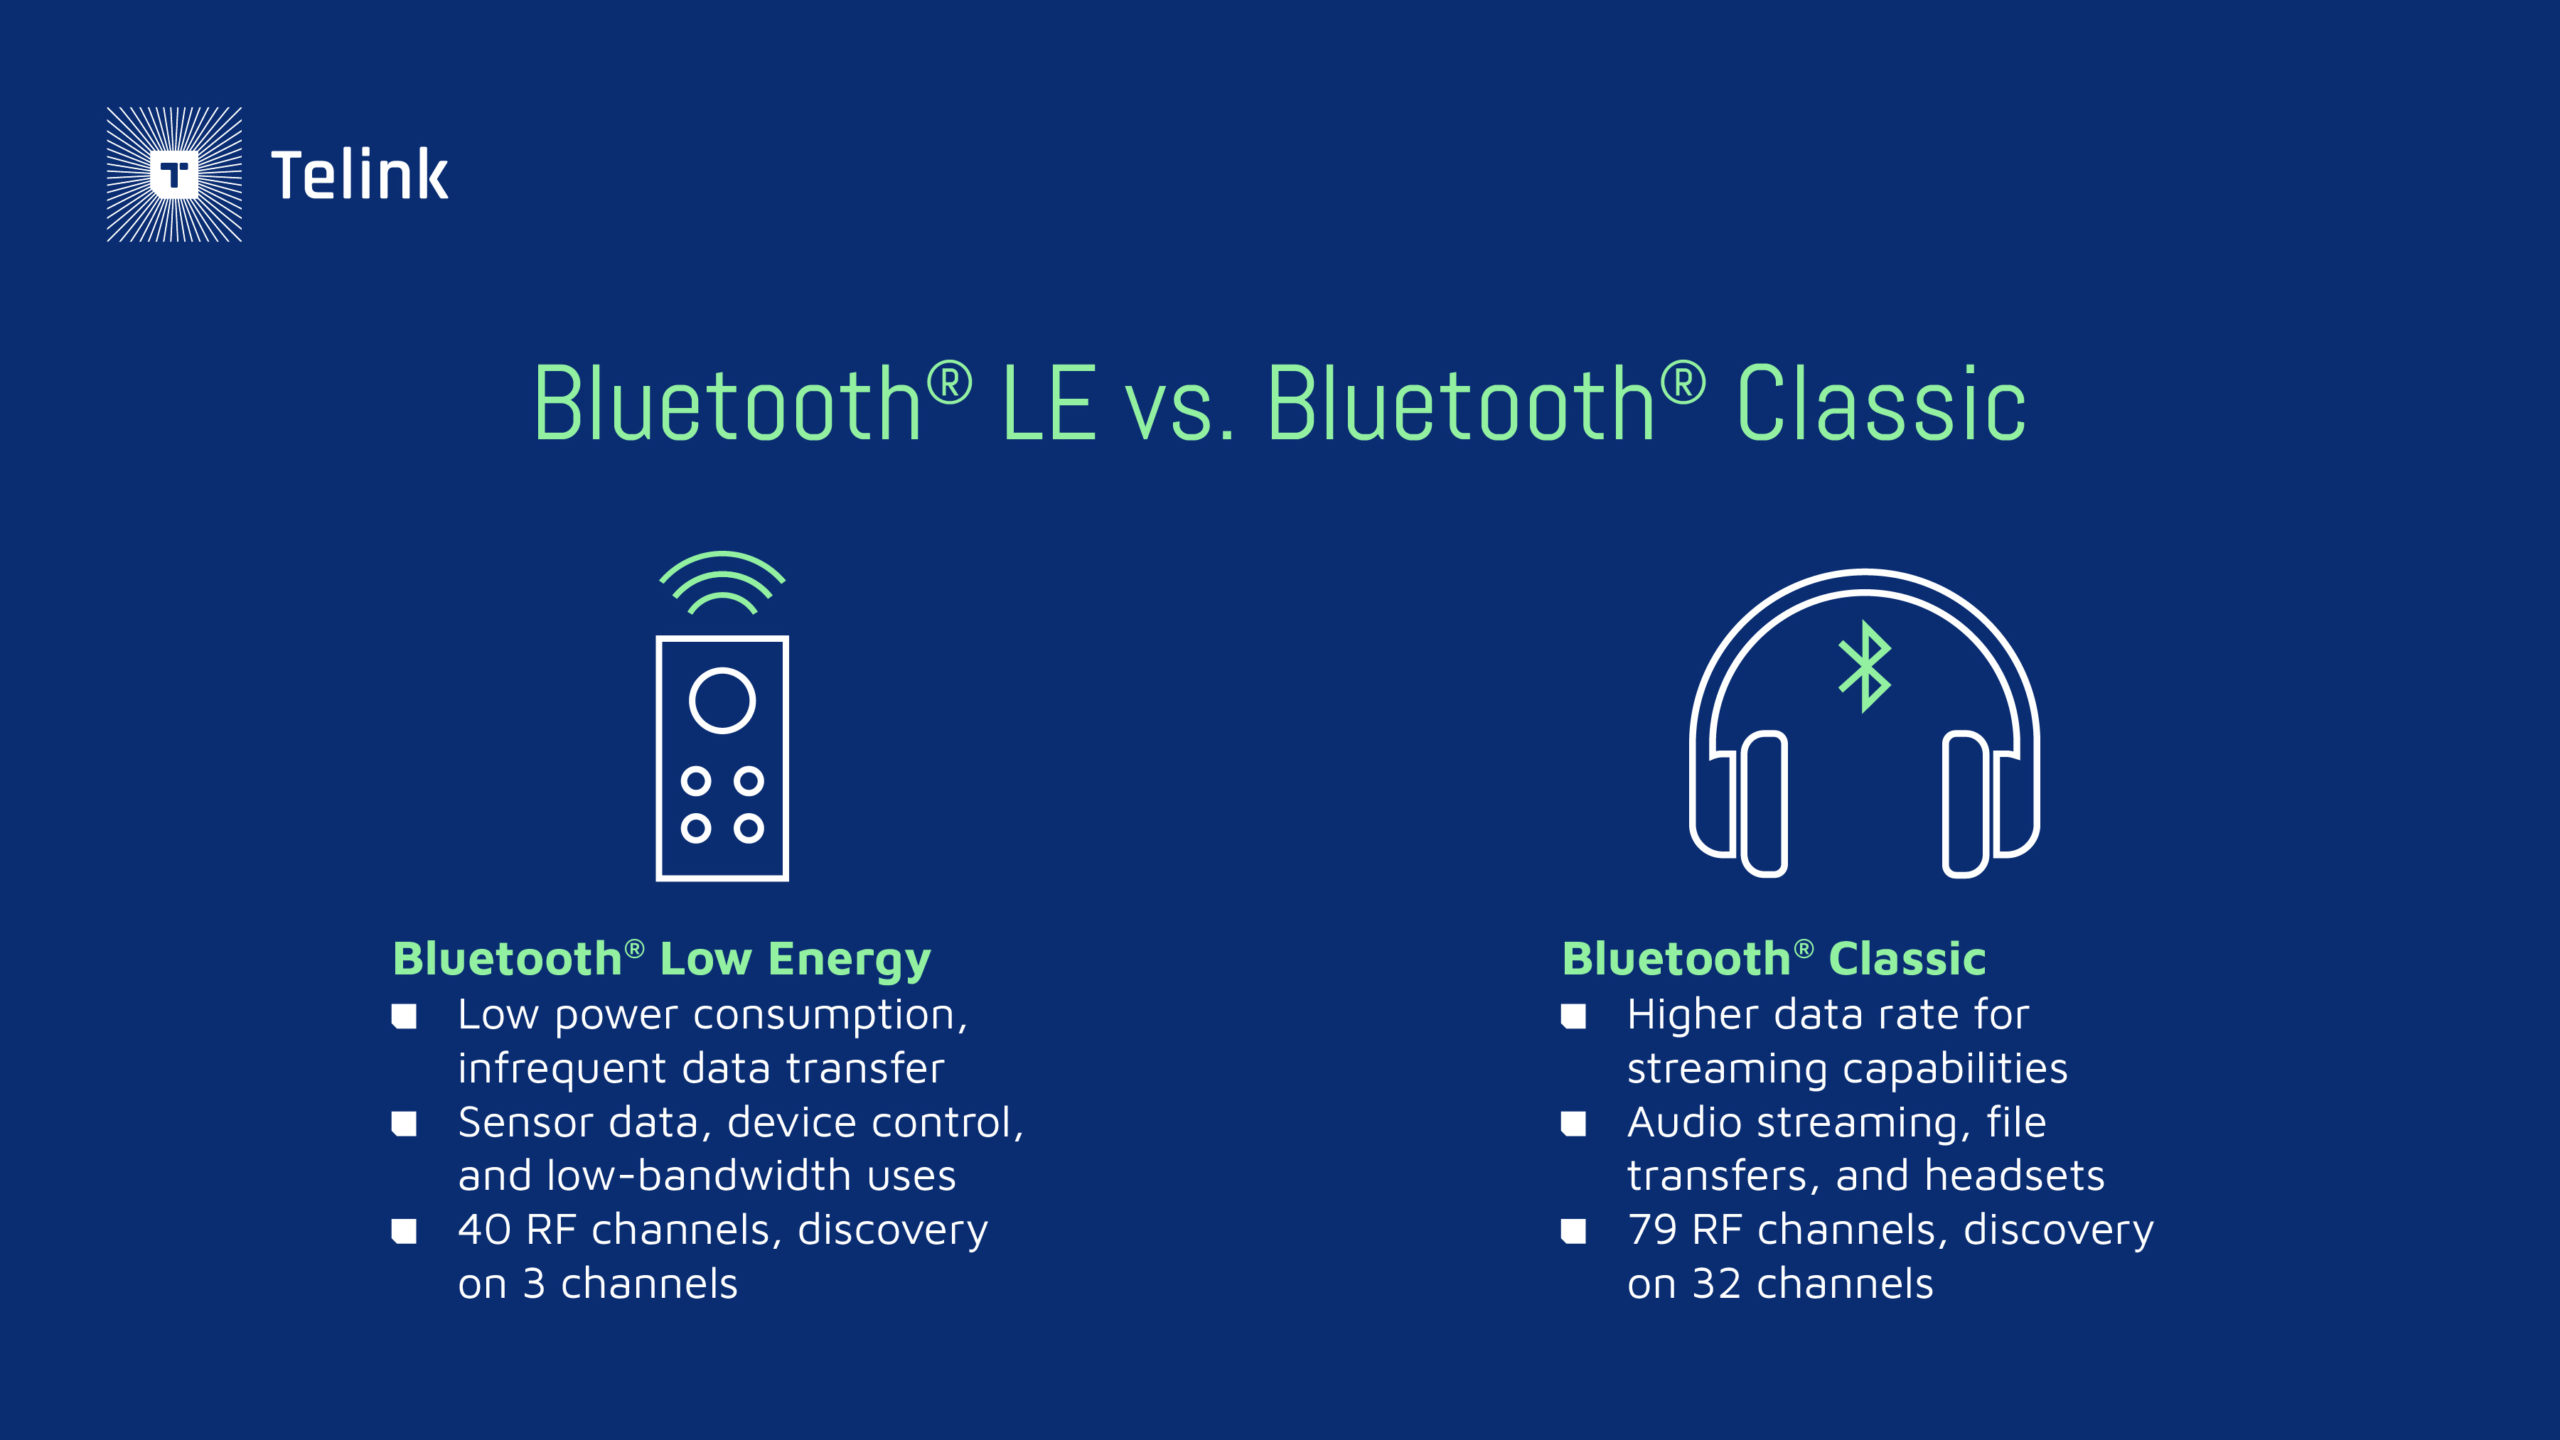 Bluetooth LE in comparison to Bluetooth Classic